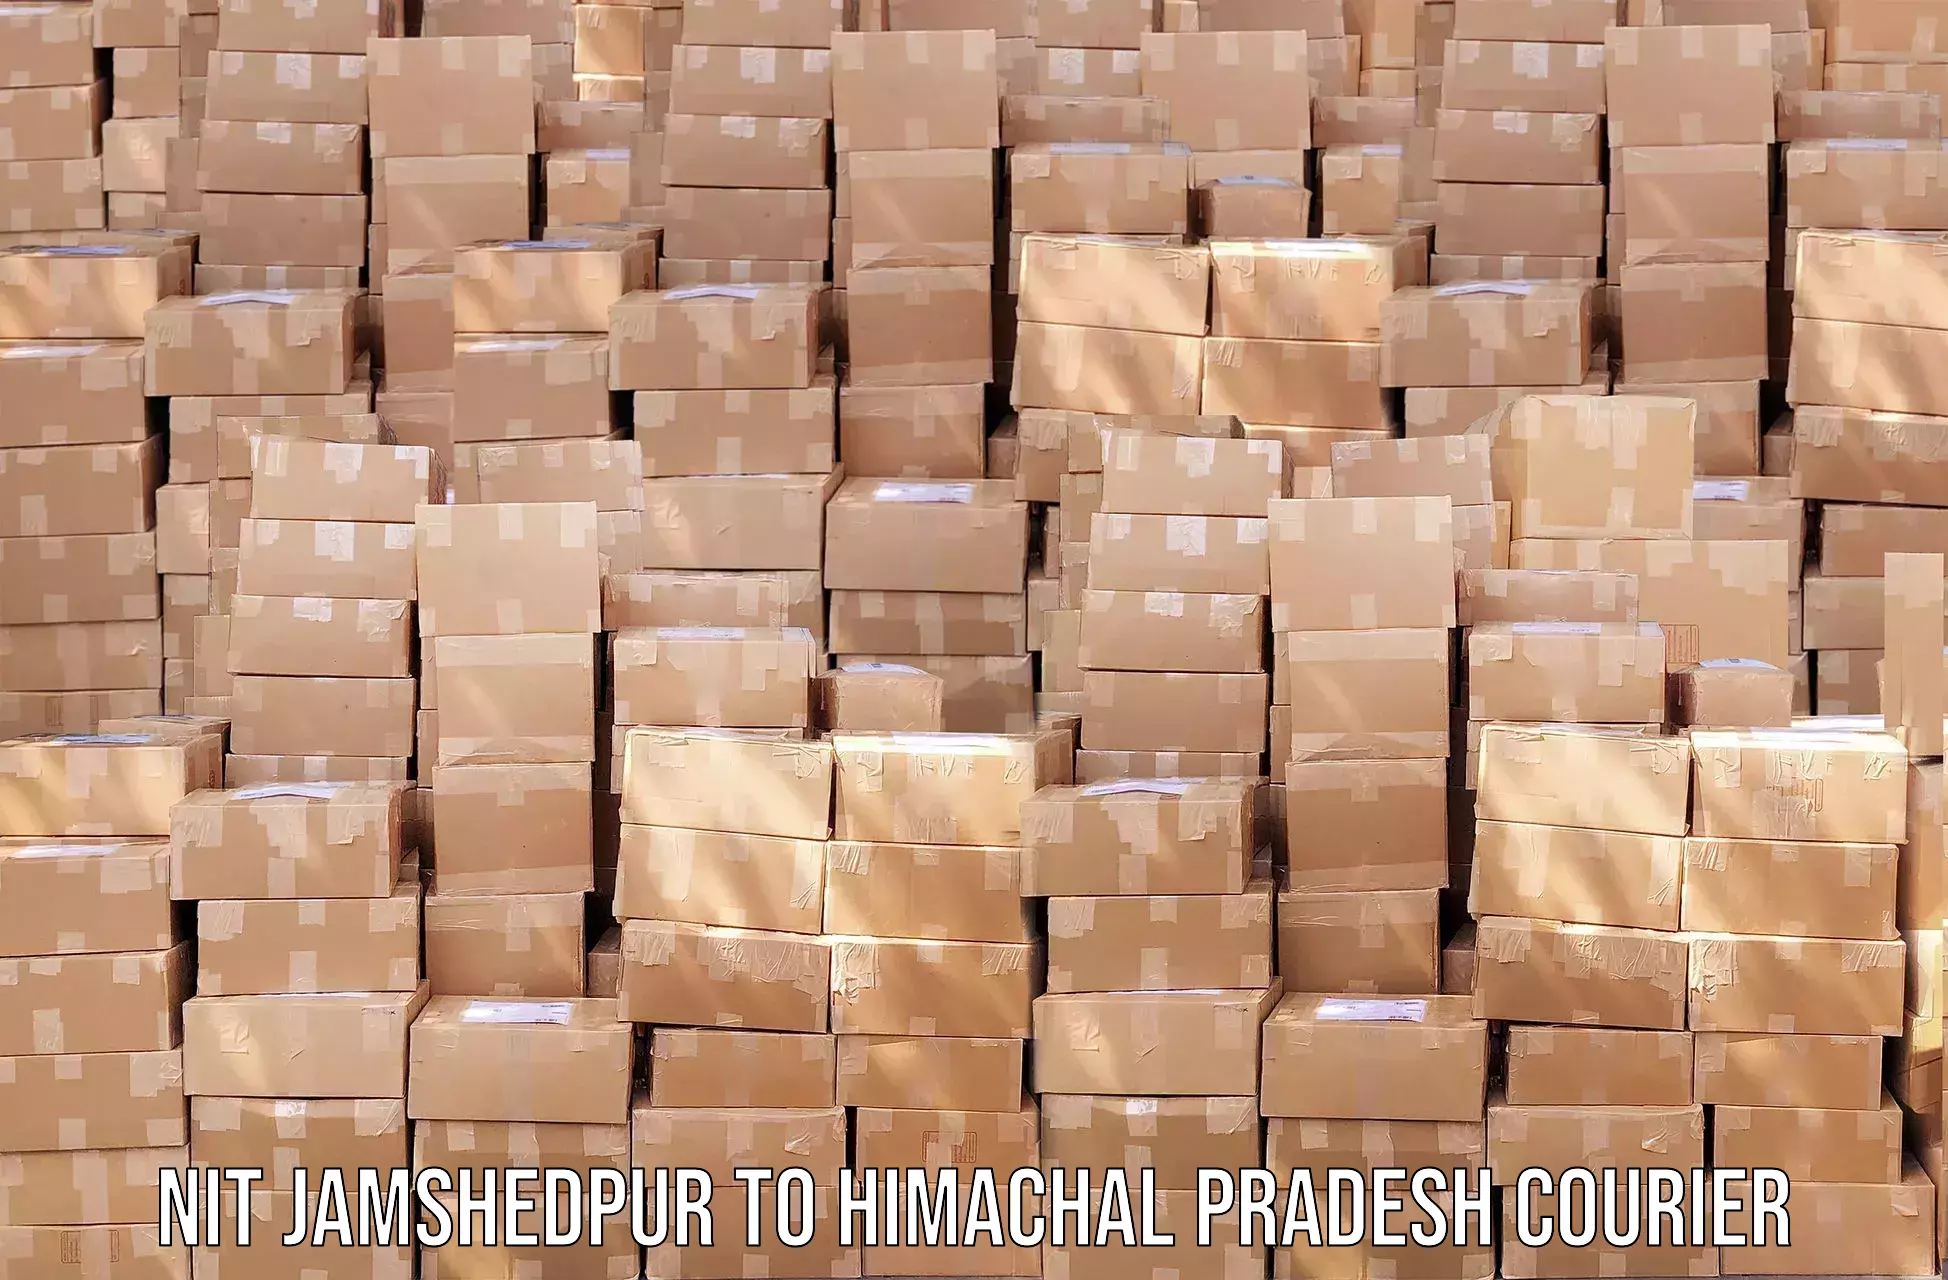 High-speed parcel service NIT Jamshedpur to Palampur